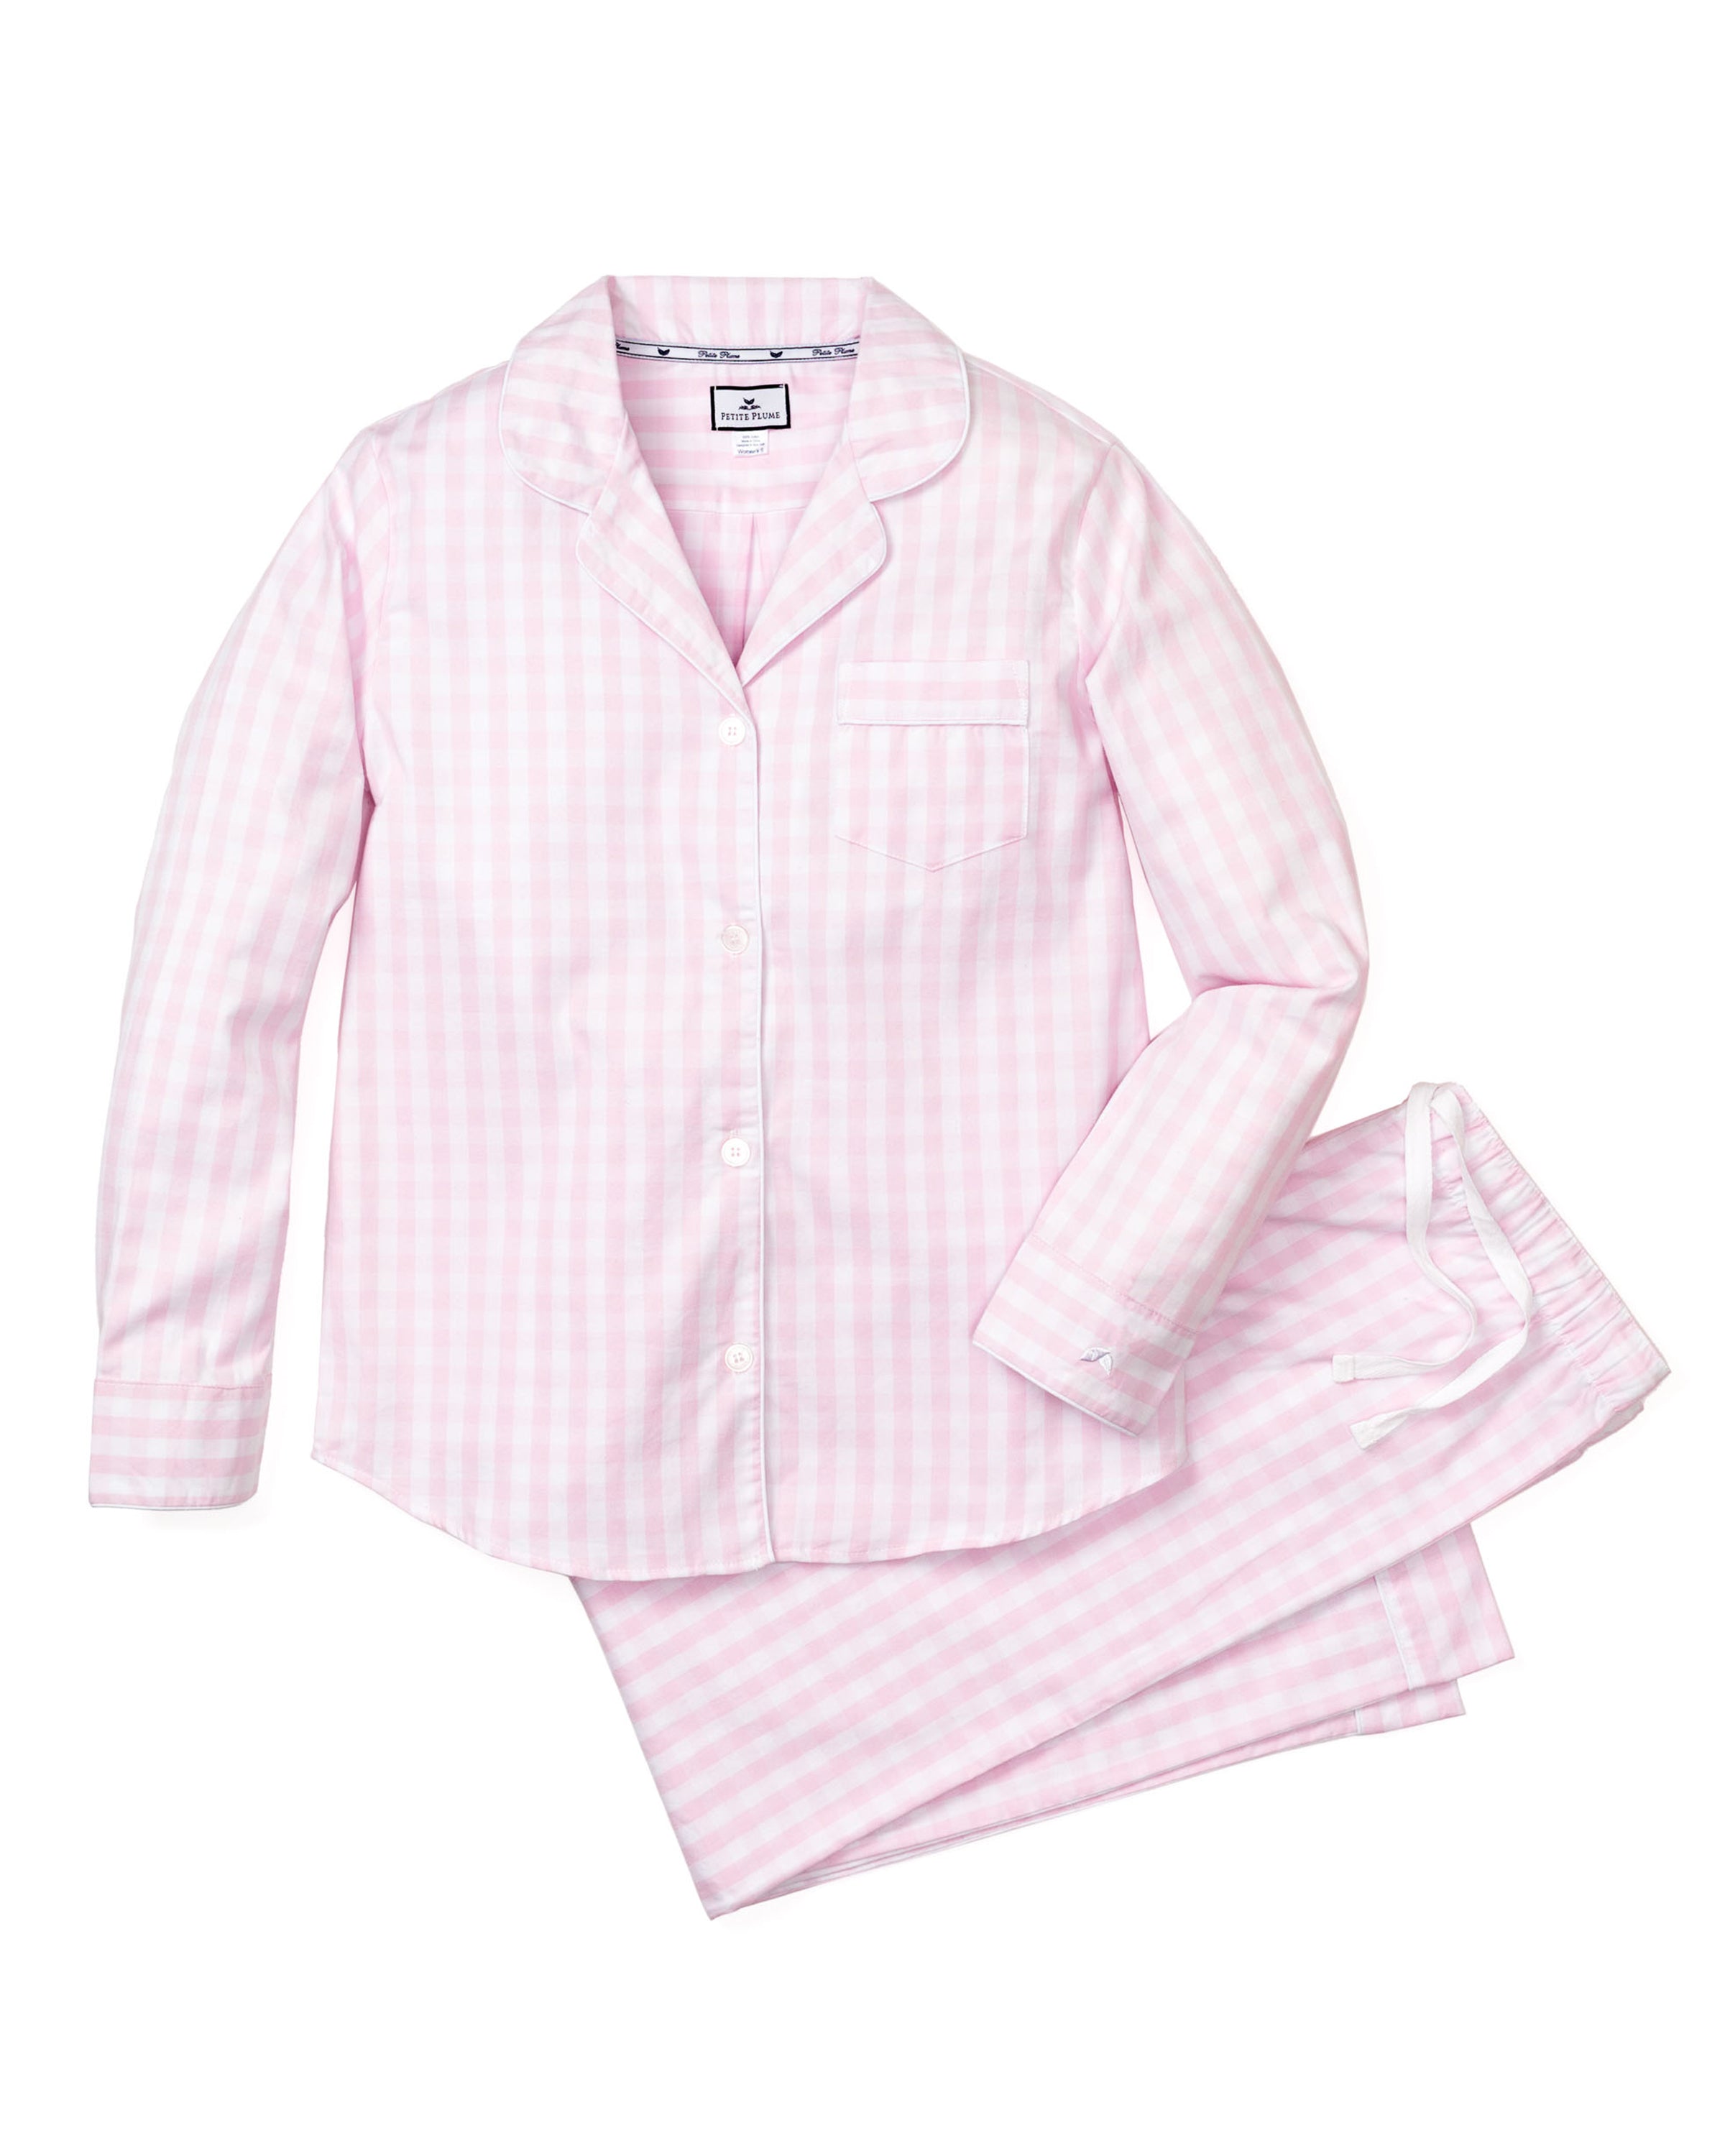 Women's Twill Pajama Set in Pink Gingham